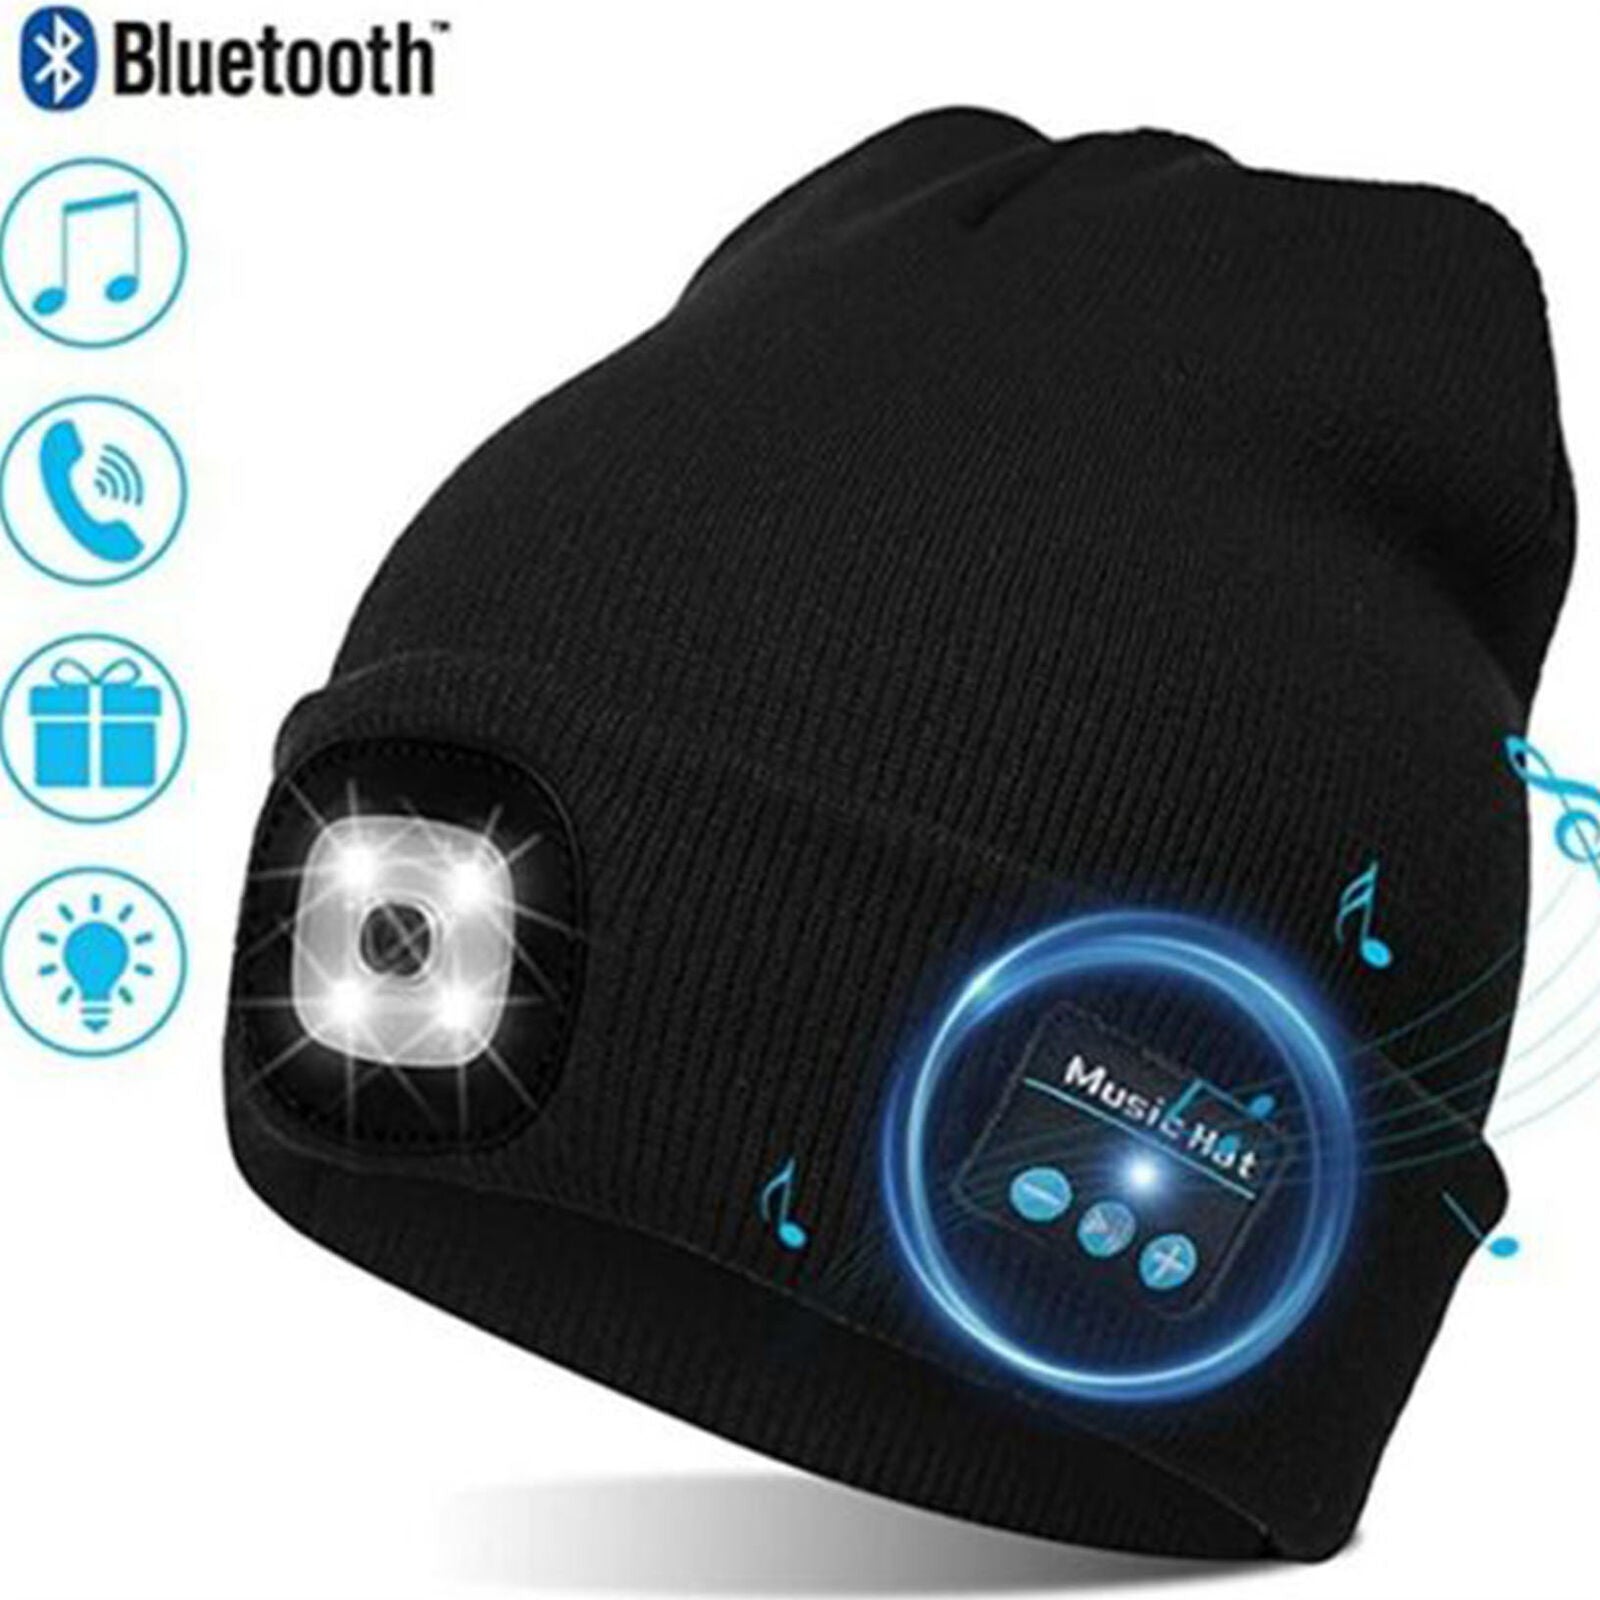 Unisex Wireless Bluetooth LED Smart Cap Winter Knitted Music Hat Mic Headset